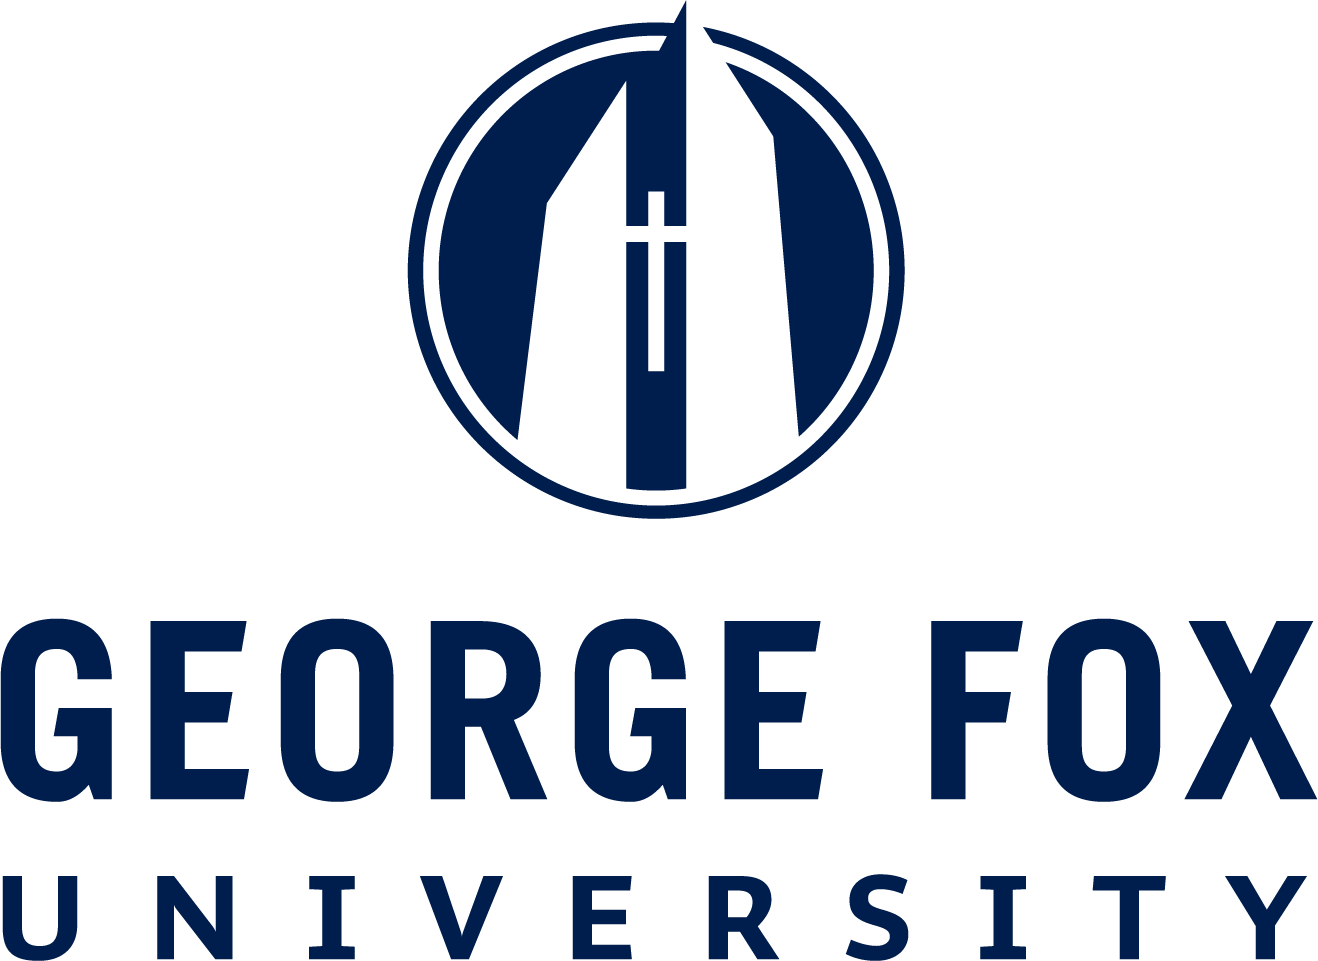 george logo